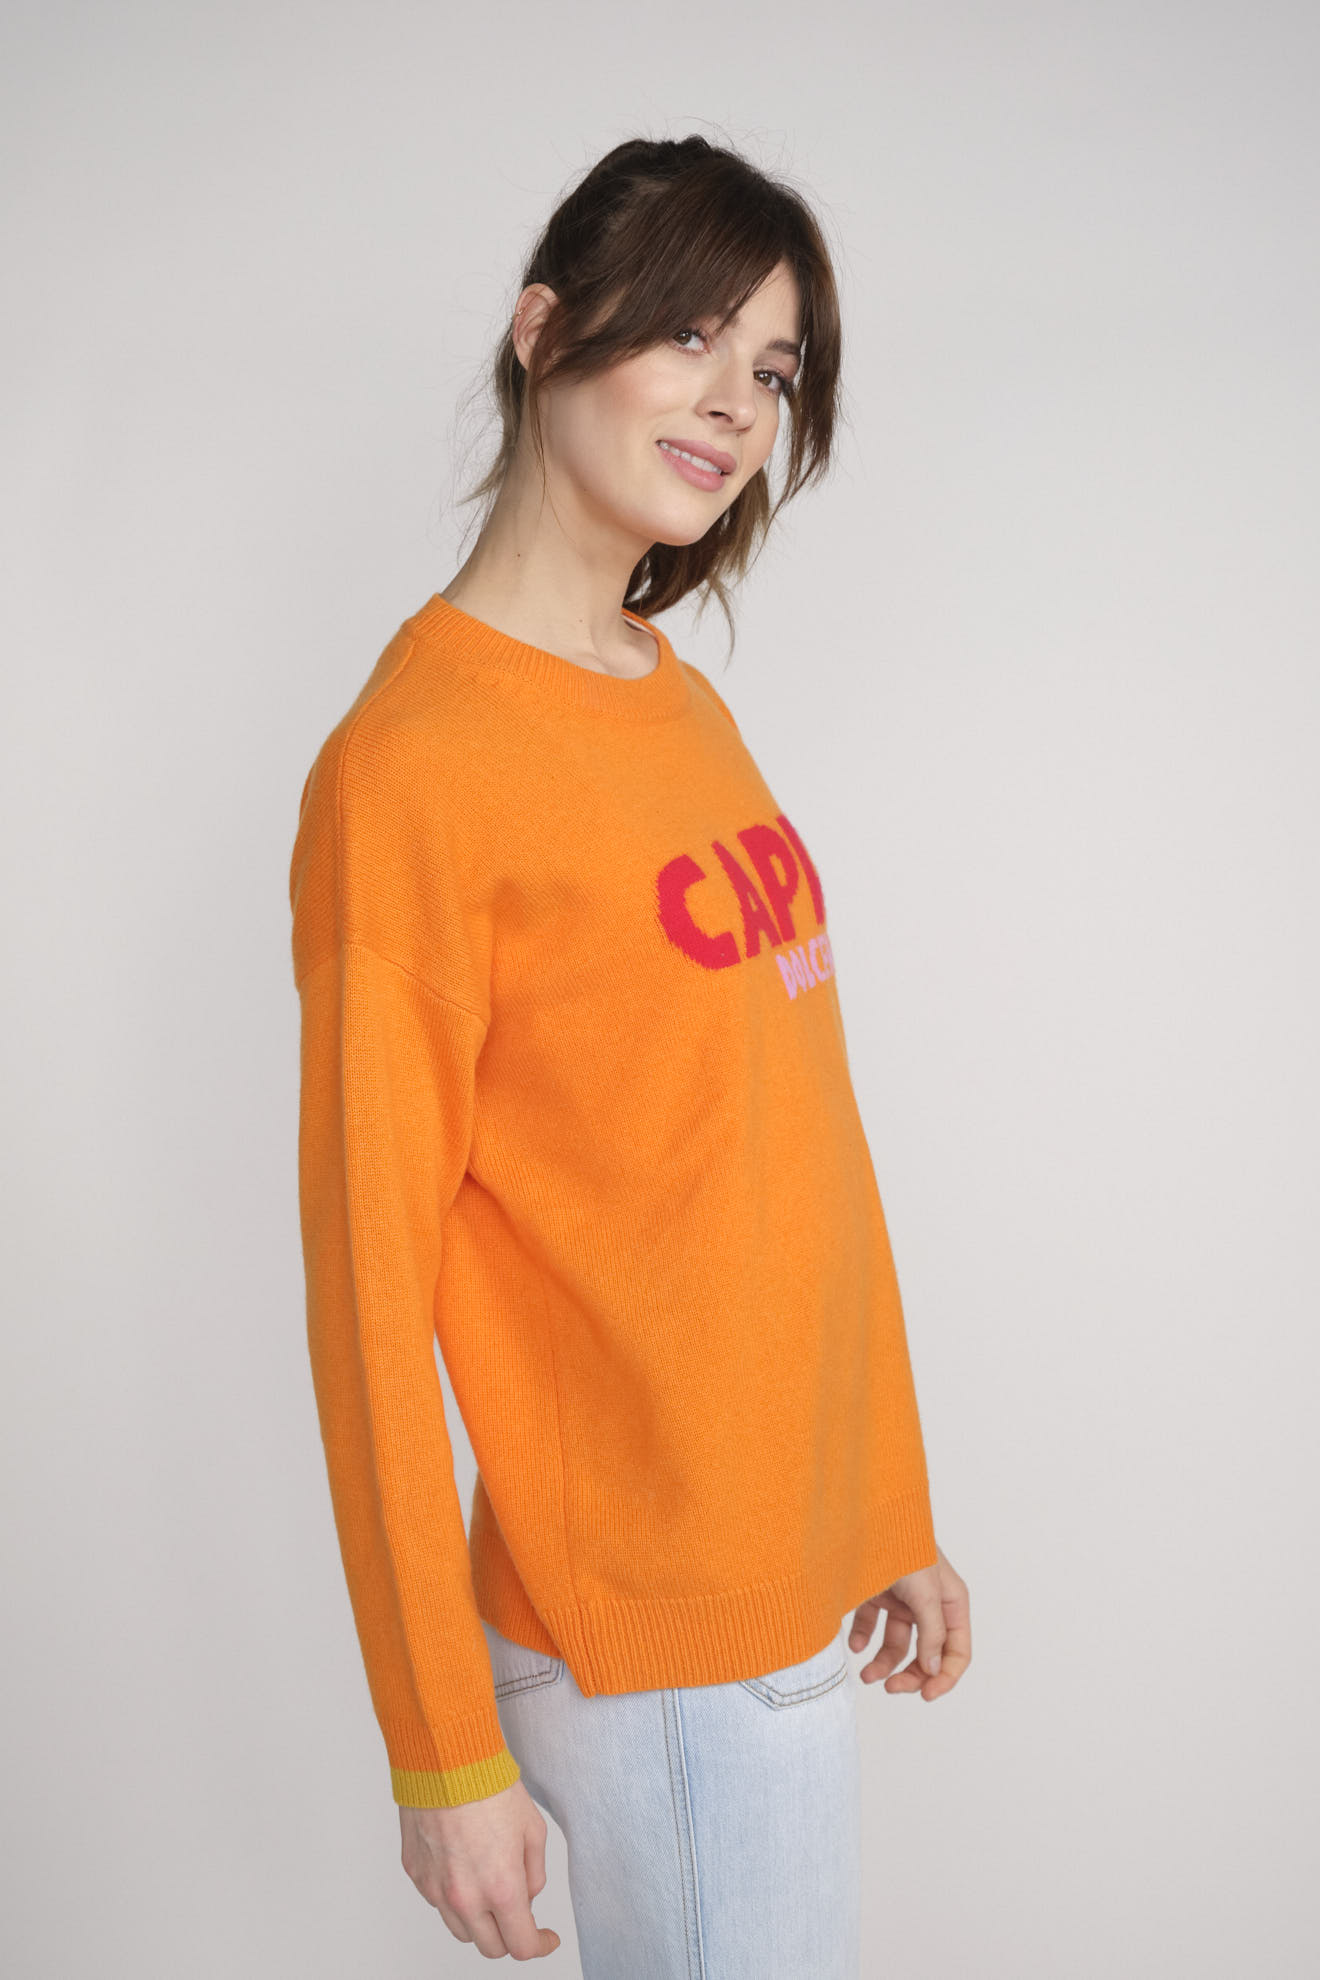 Catrin Schanz Capri - Maglia a maniche lunghe in cashmere con stampa arancione L